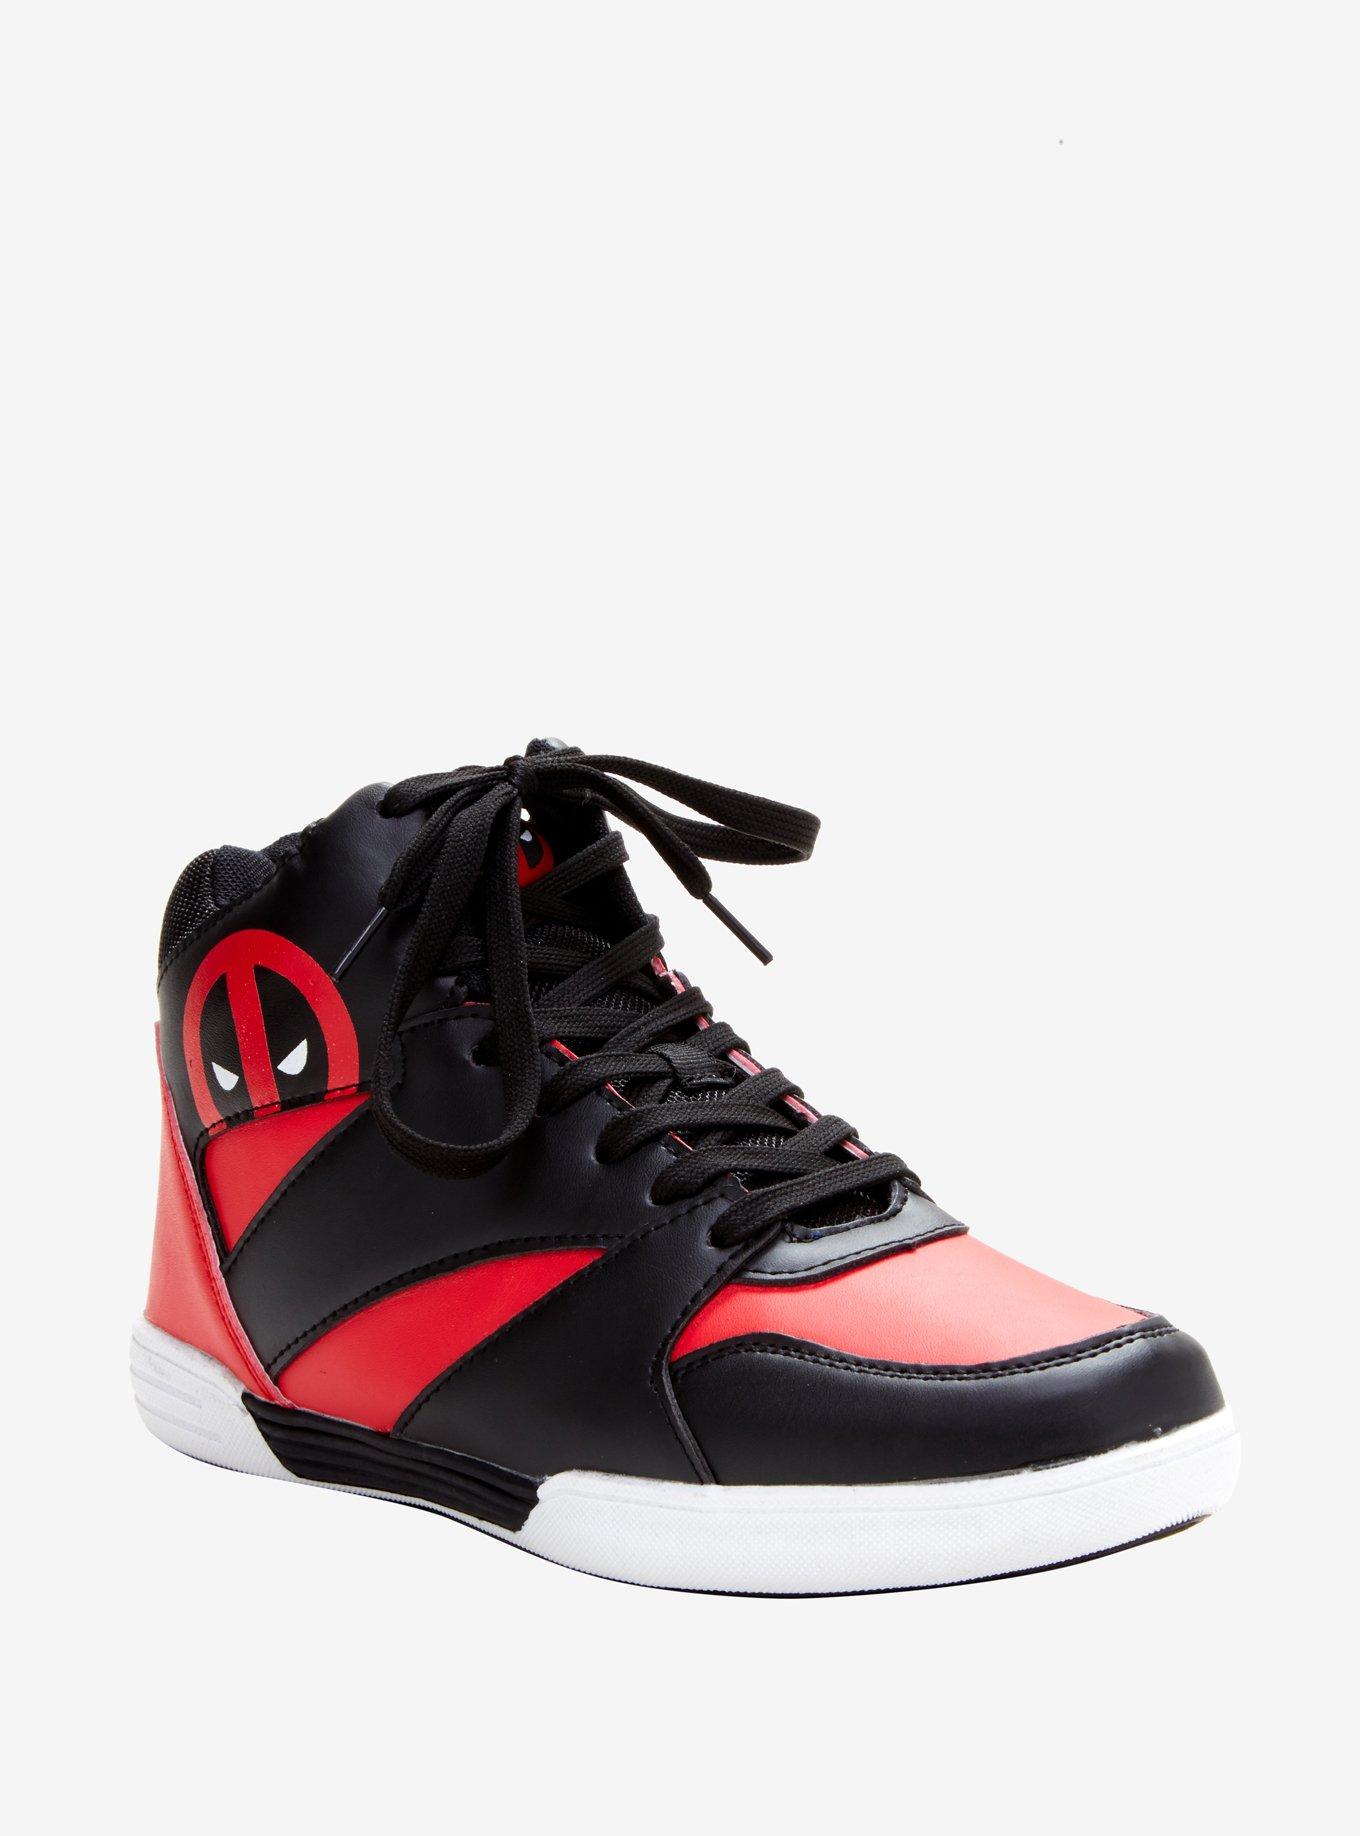 Deadpool Fashion Sneakers for Men